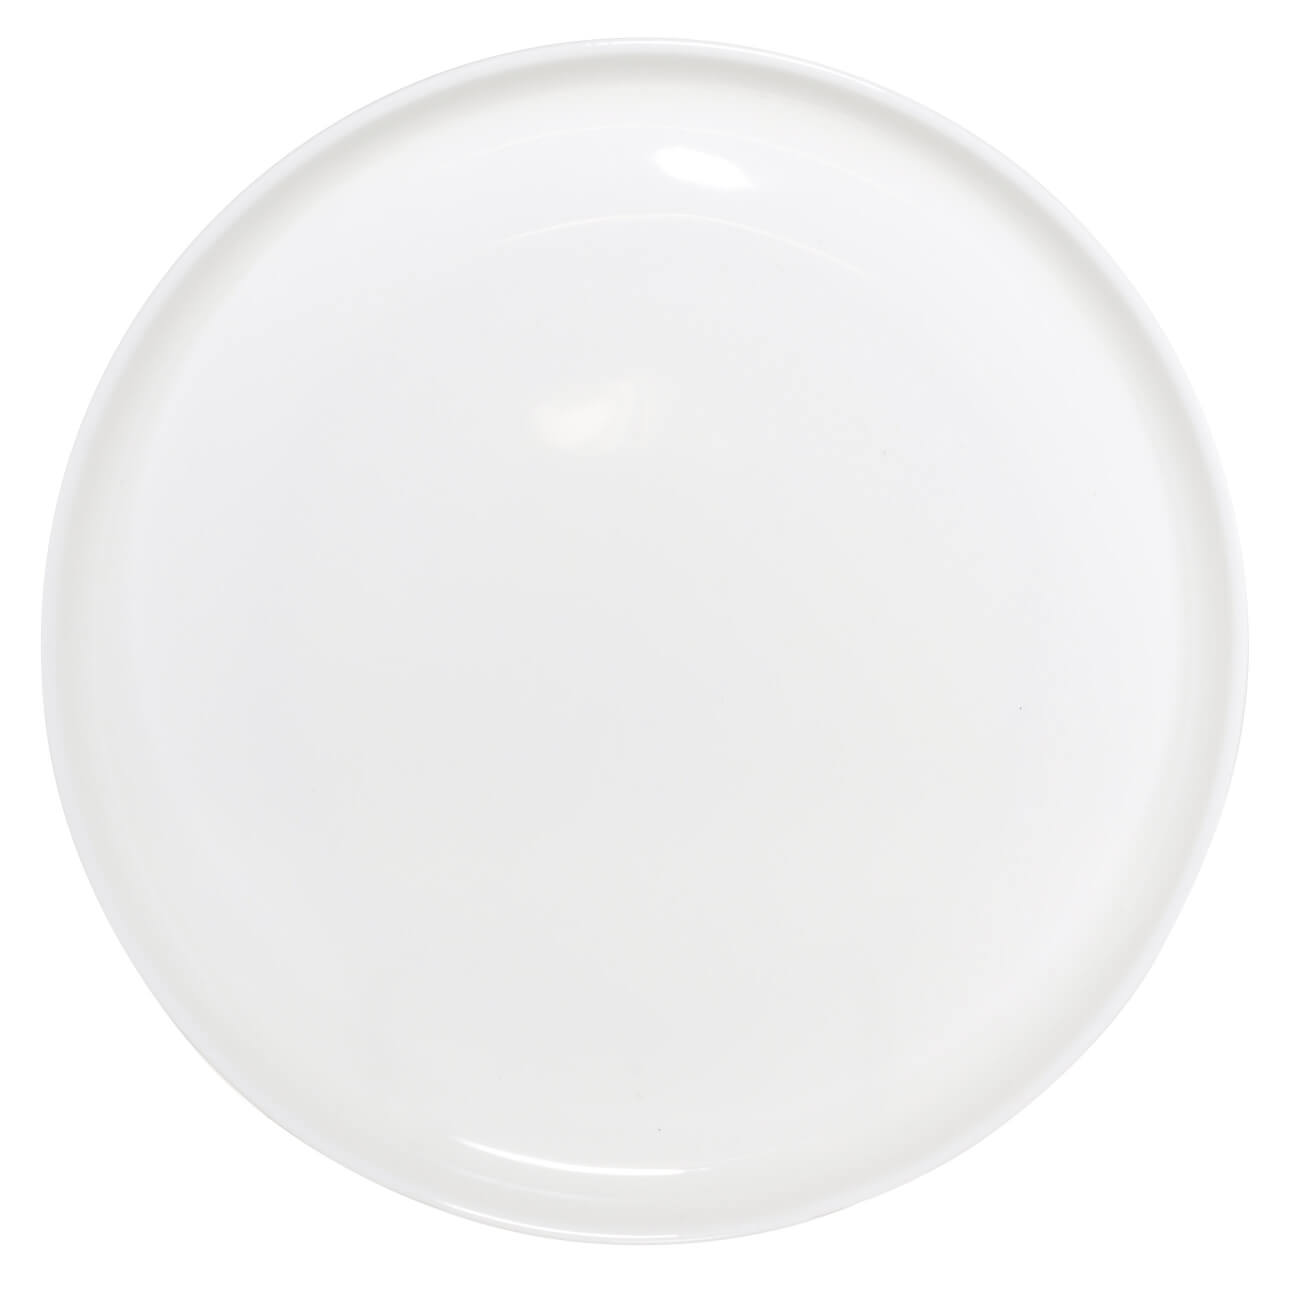 Тарелка обеденная, 26 см, фарфор F, белая, Ideal white тарелка суповая 20х5 см 2 шт фарфор f белая ideal white